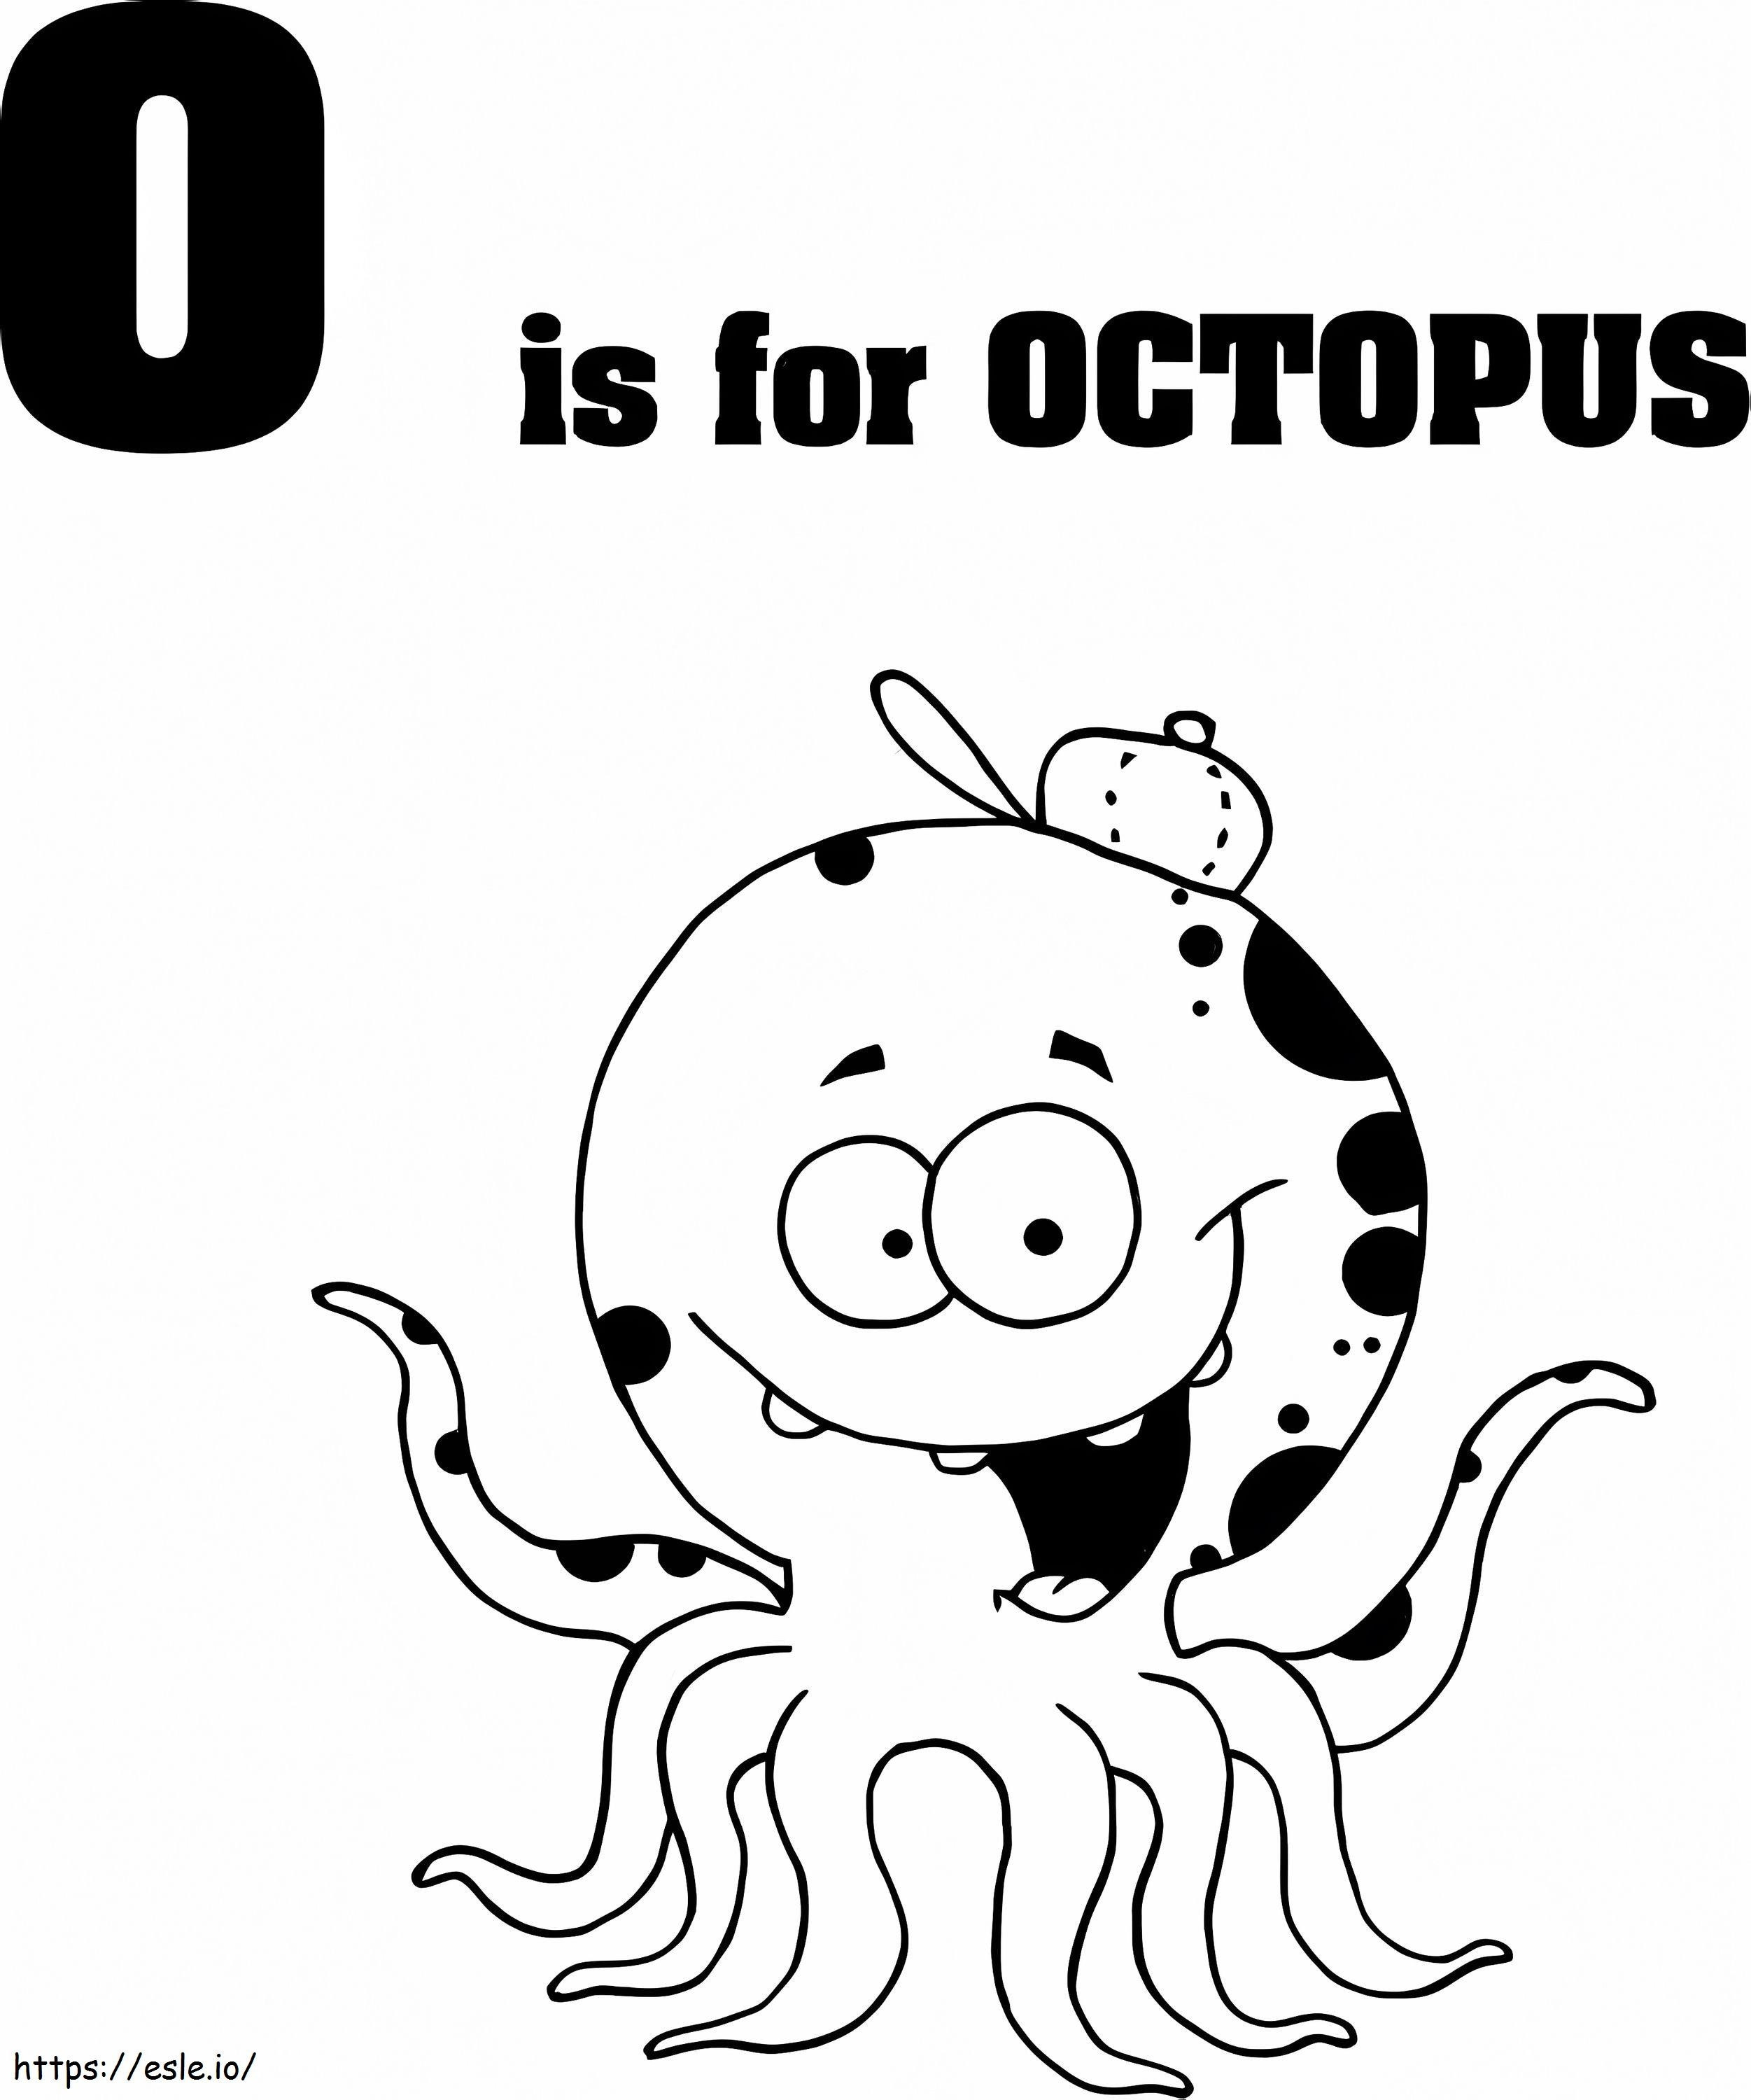 Lustiger Oktopus-Buchstabe O ausmalbilder